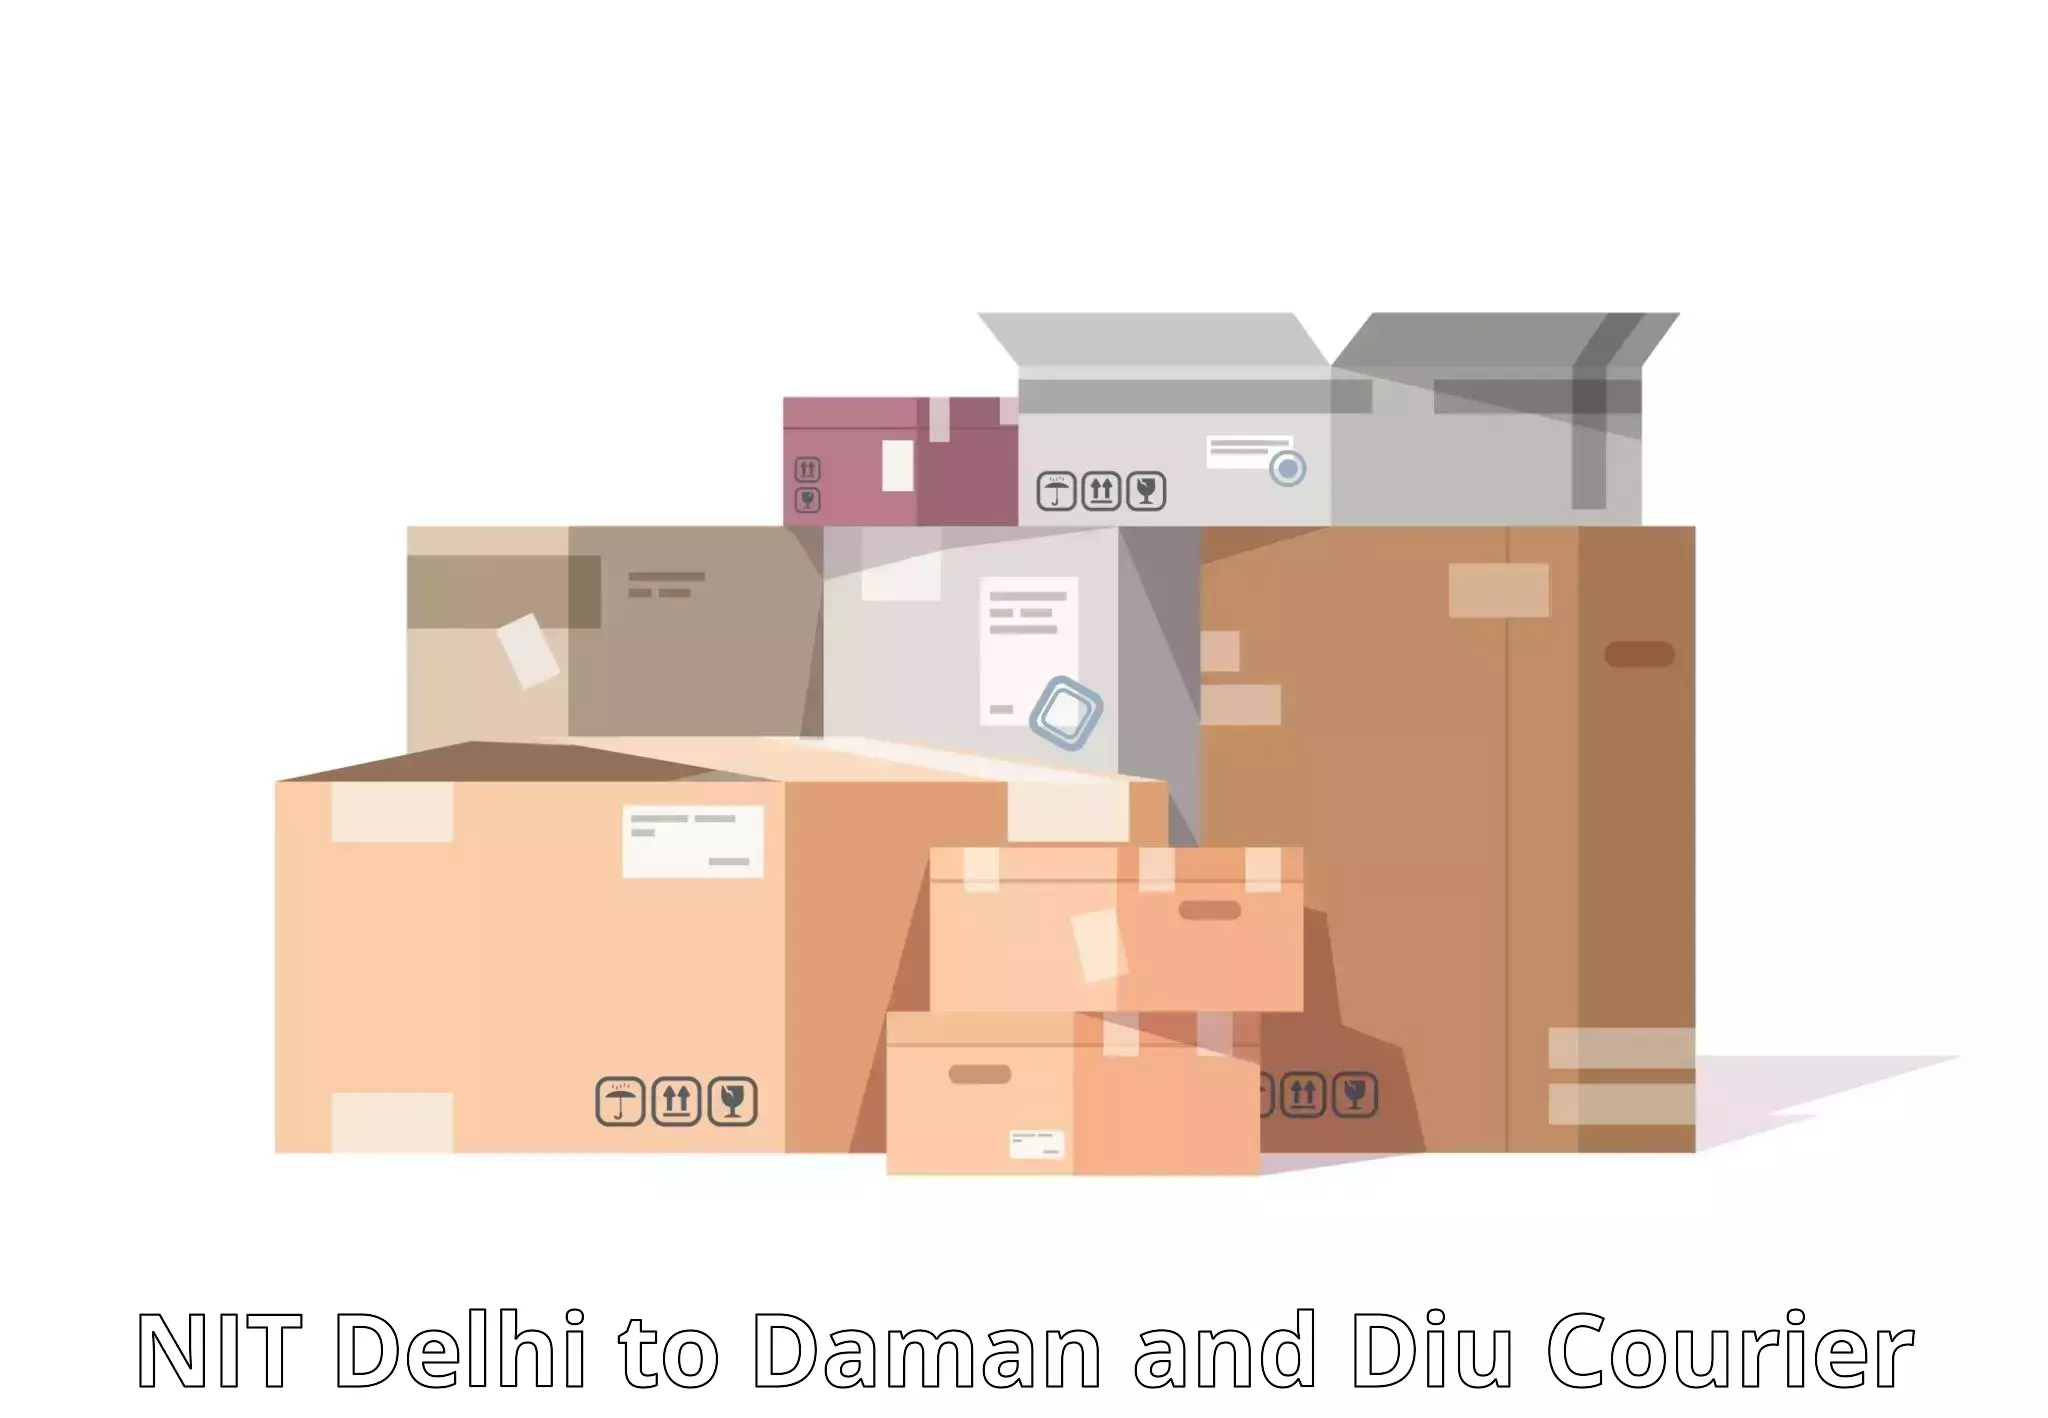 Short distance delivery NIT Delhi to Diu